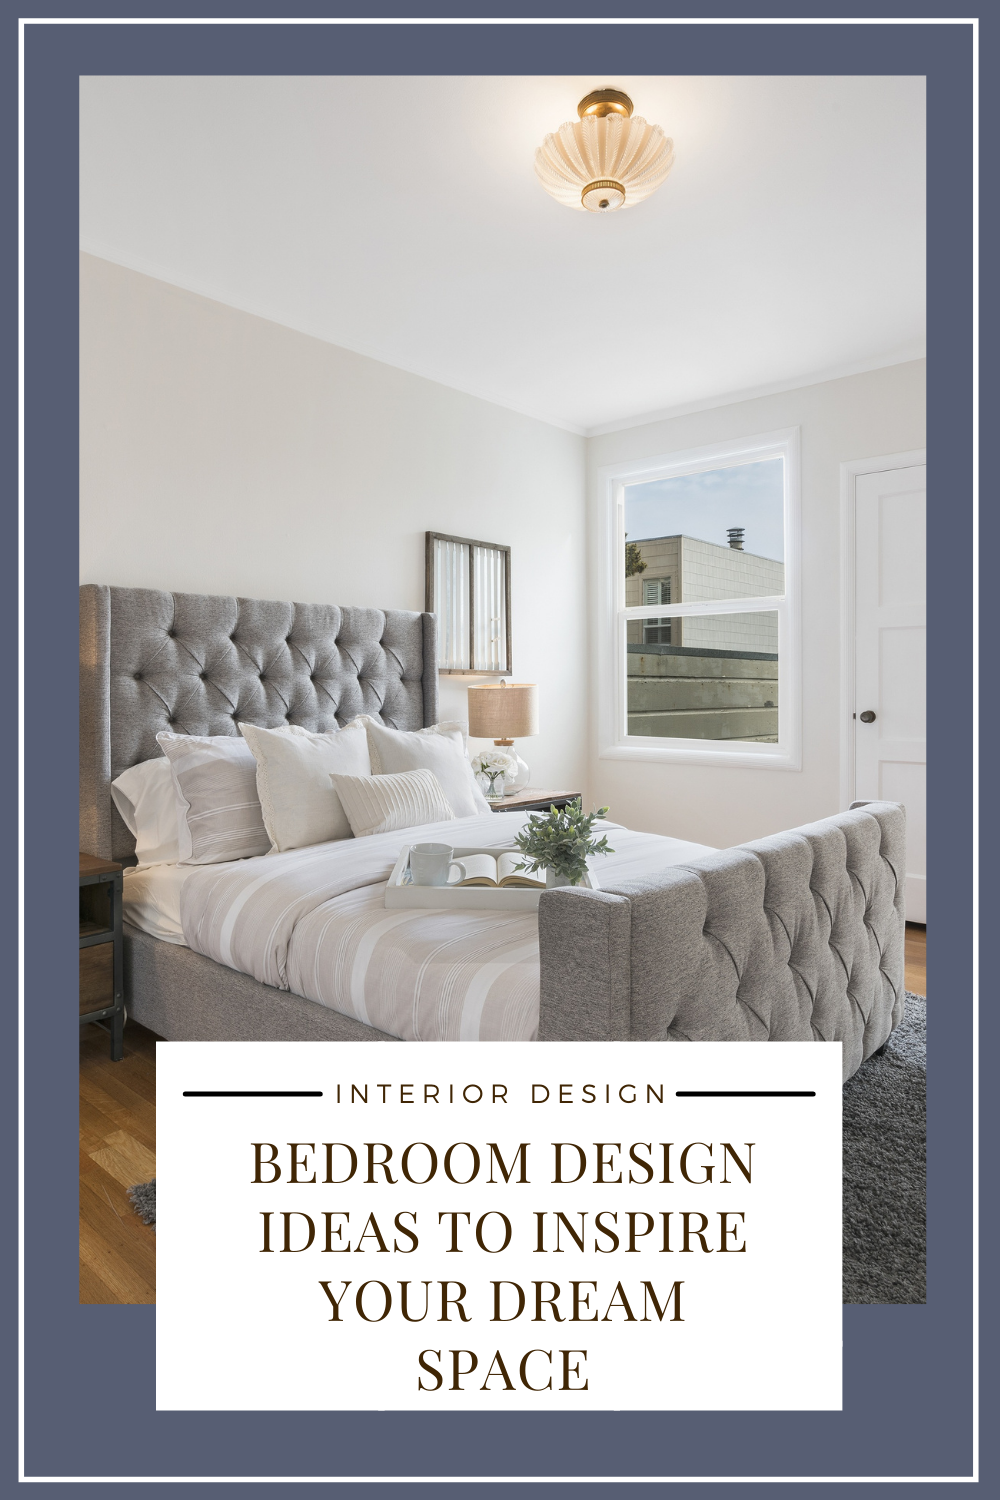 Bedroom Design Ideas To Inspire Your Dream Space - I do deClaire